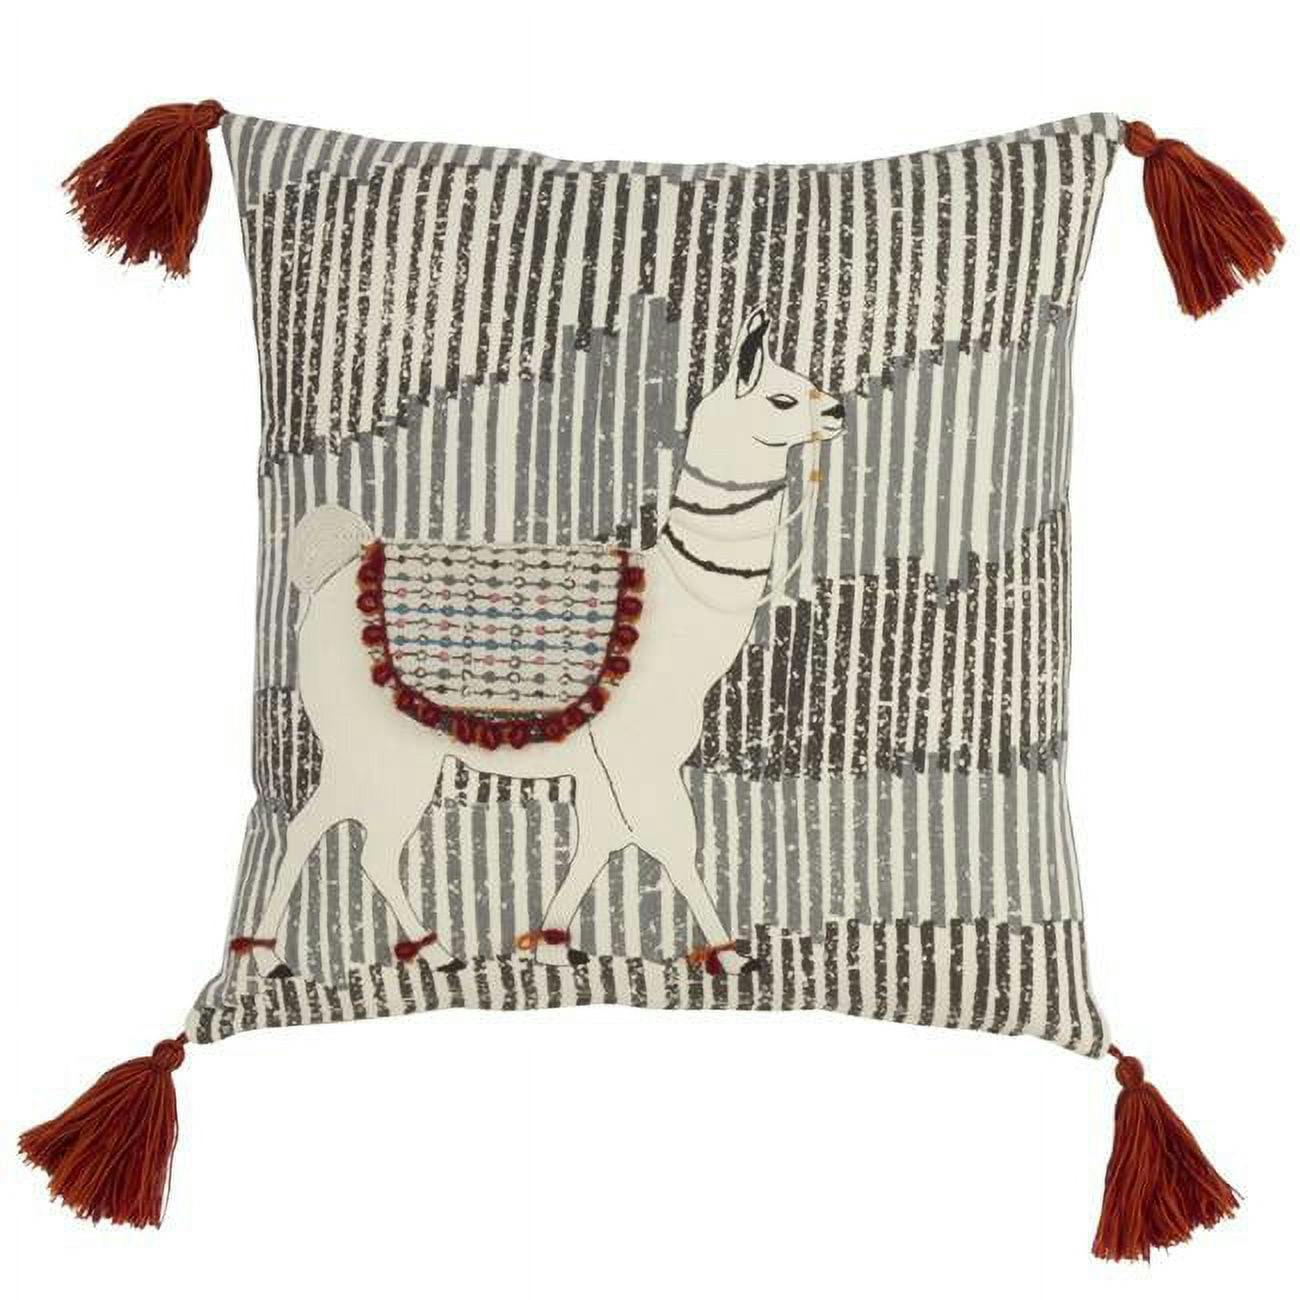 Whimsical Llama Tasseled 18" Square Cotton Throw Pillow